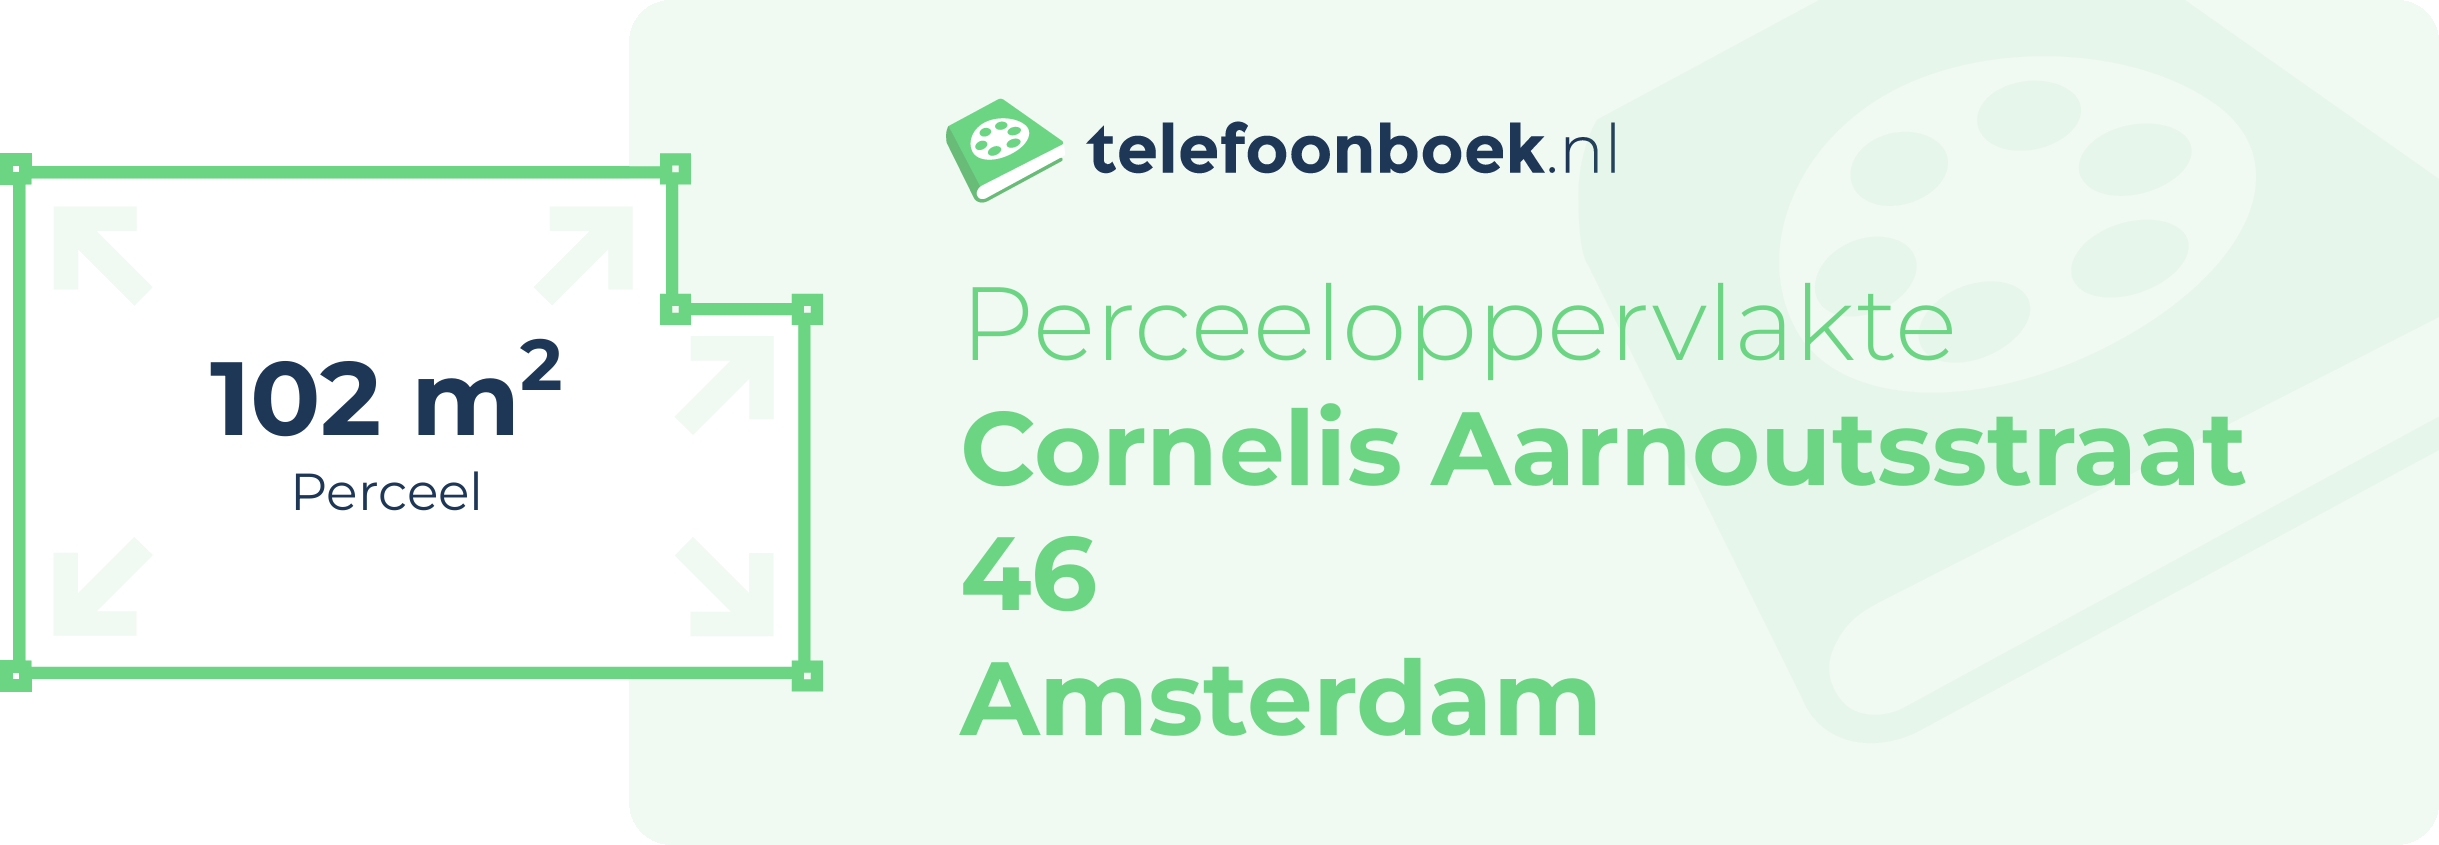 Perceeloppervlakte Cornelis Aarnoutsstraat 46 Amsterdam